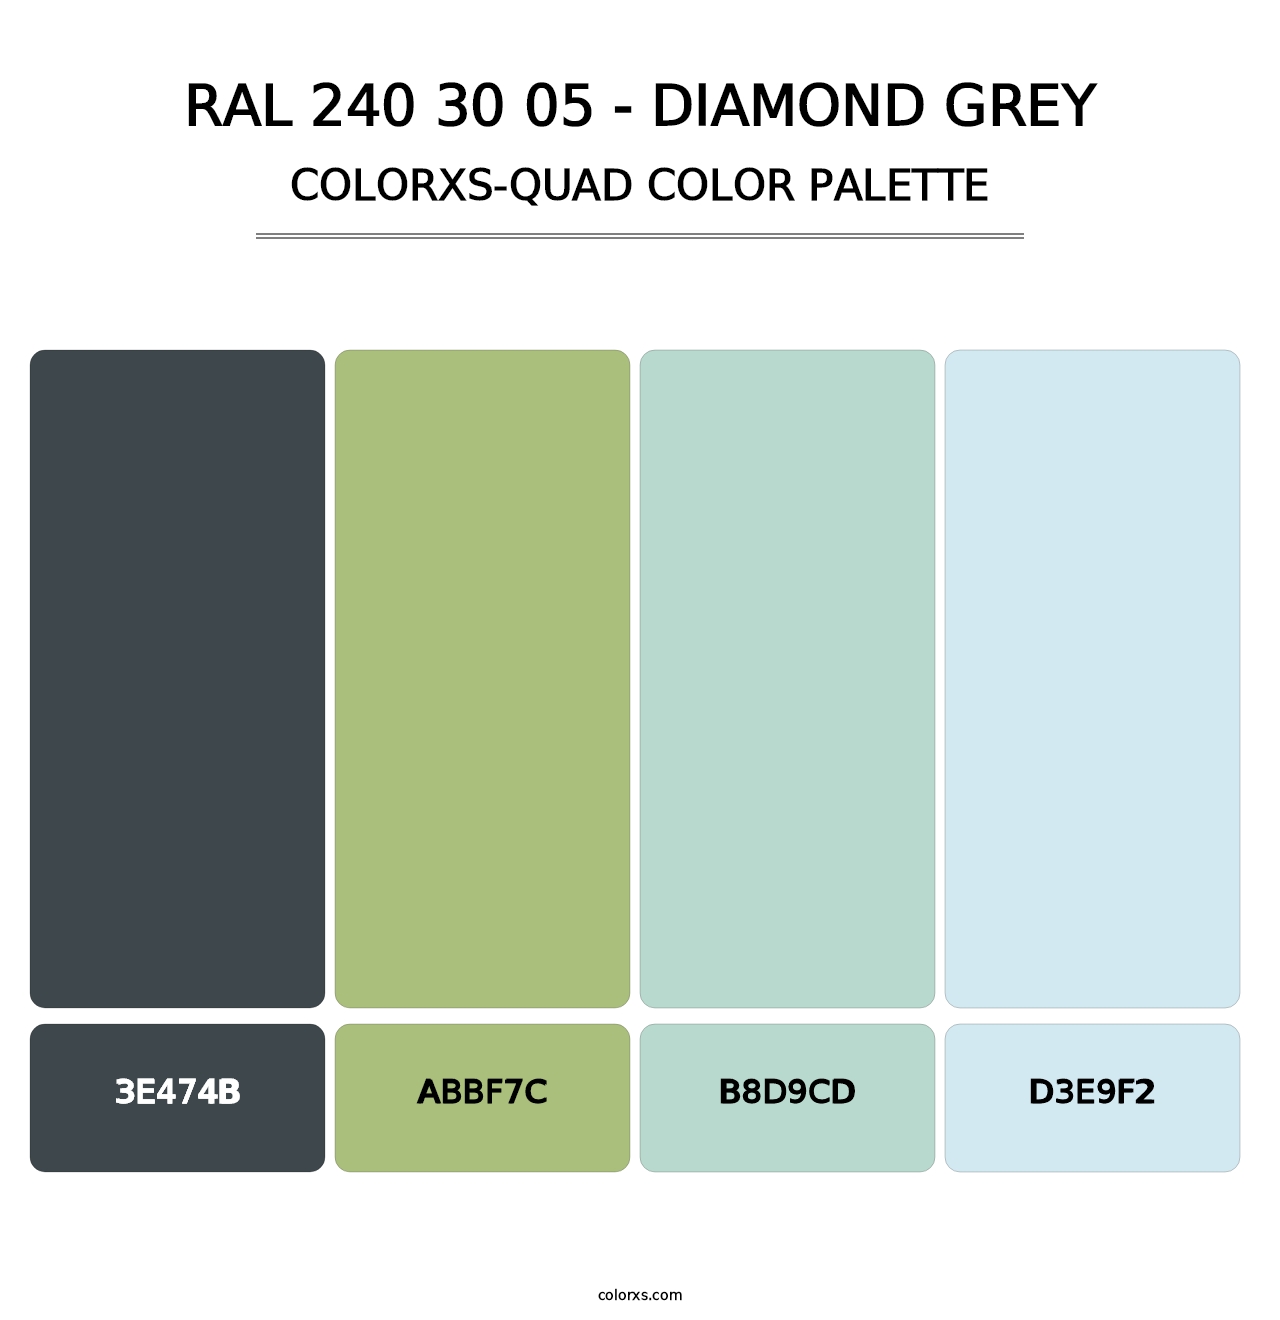 RAL 240 30 05 - Diamond Grey - Colorxs Quad Palette